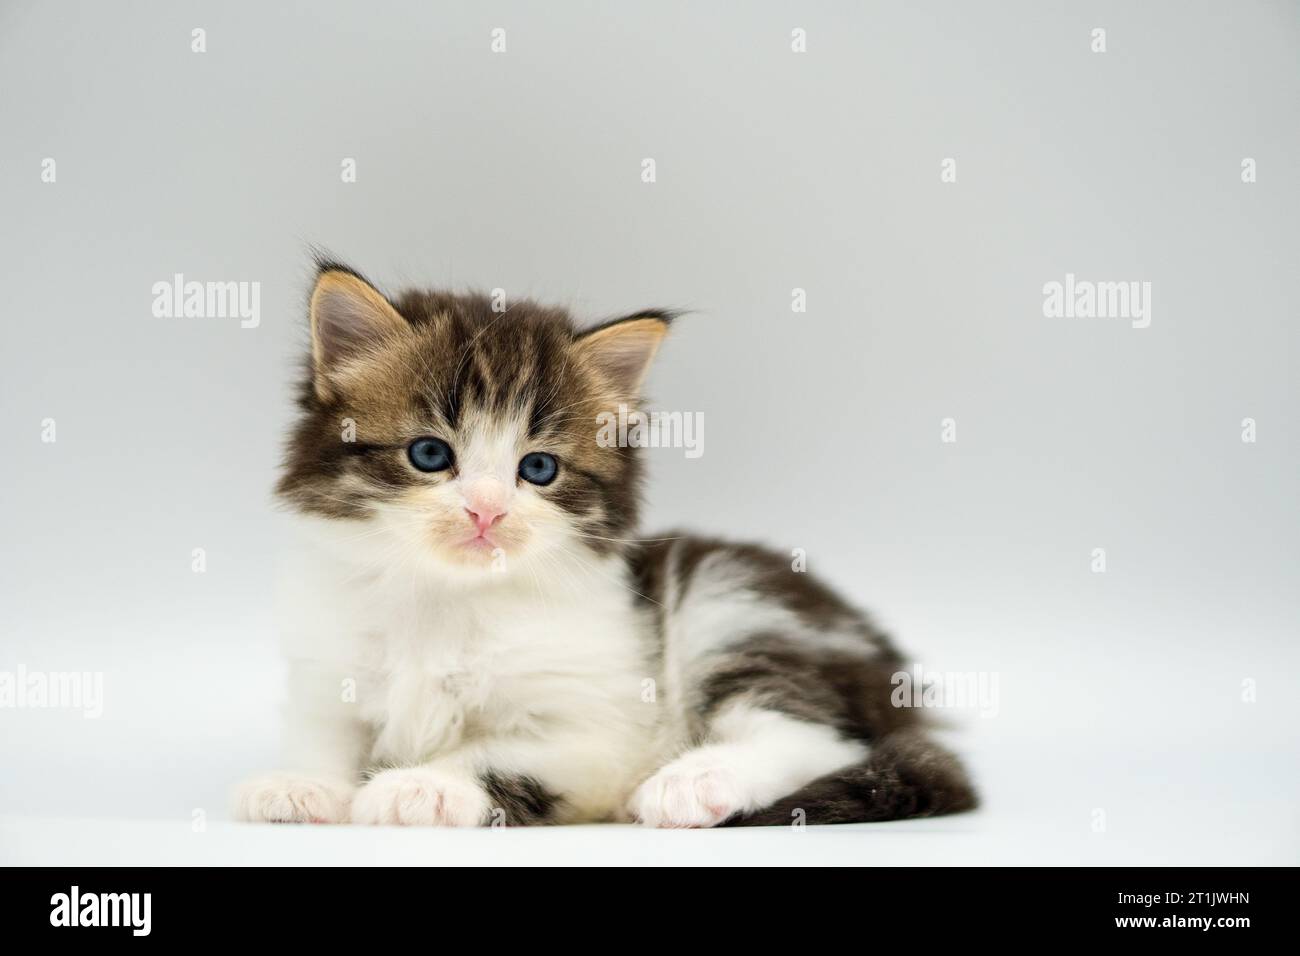 Siberian cat on white backgrounds Stock Photo